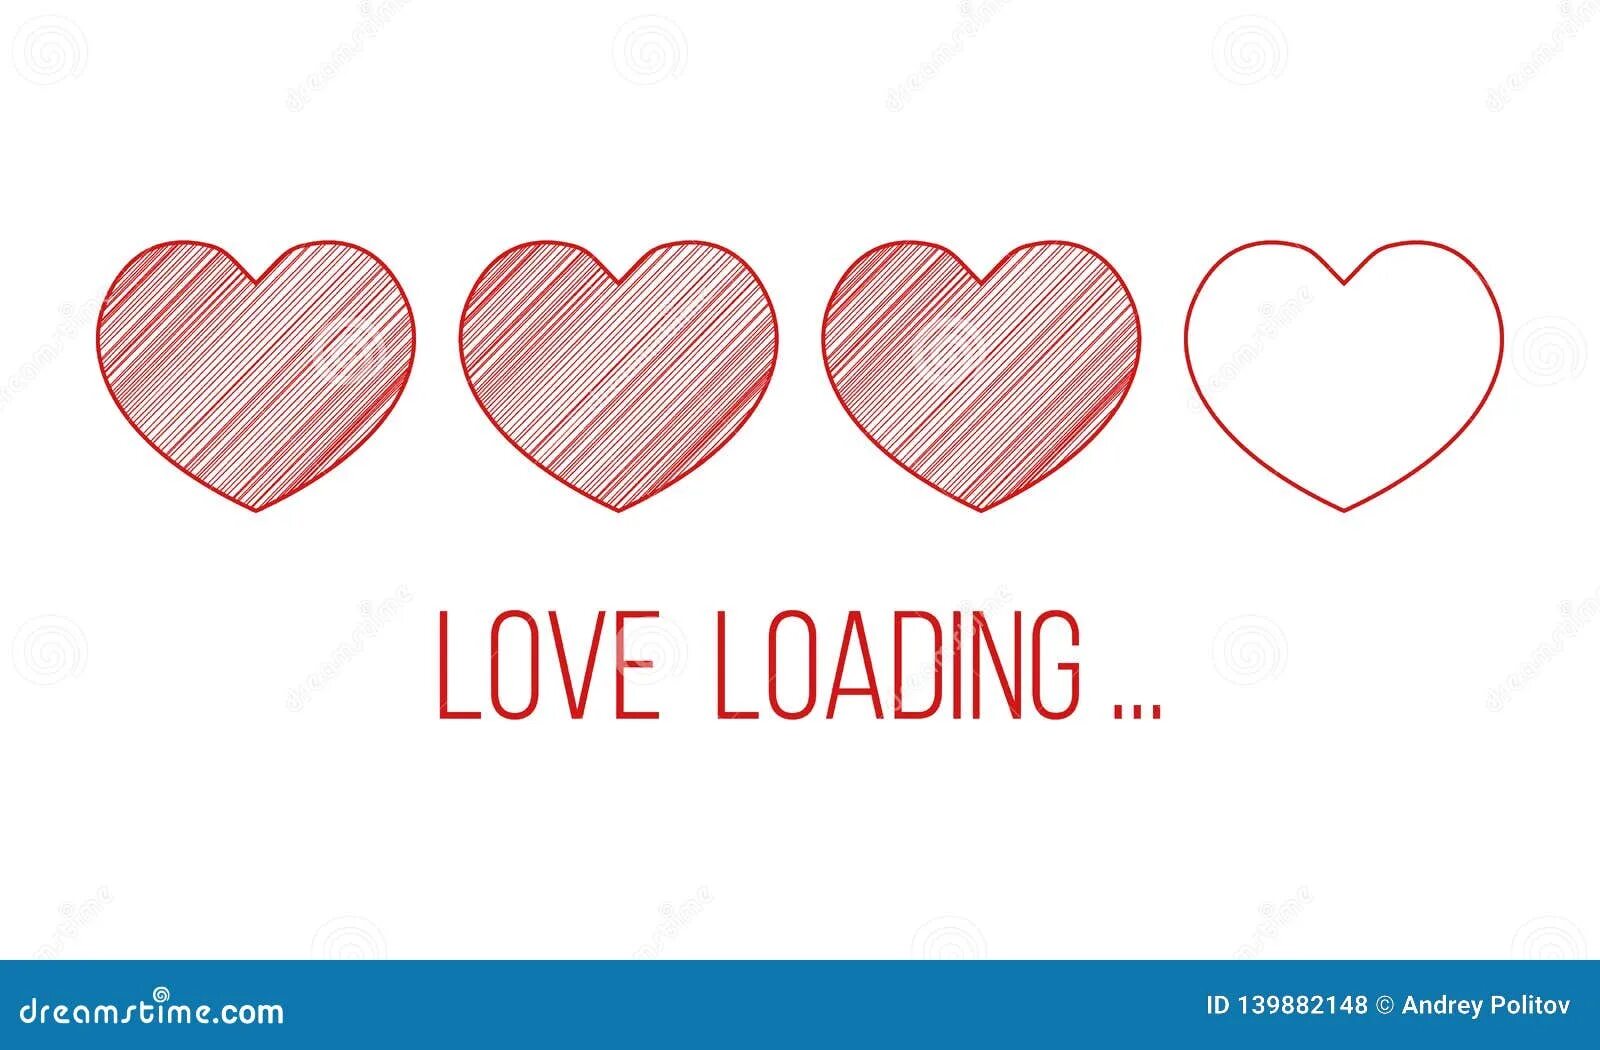 Love loading. Загрузка сердца. Лодинг лов. Loading любовь. Лоадинг сердце.